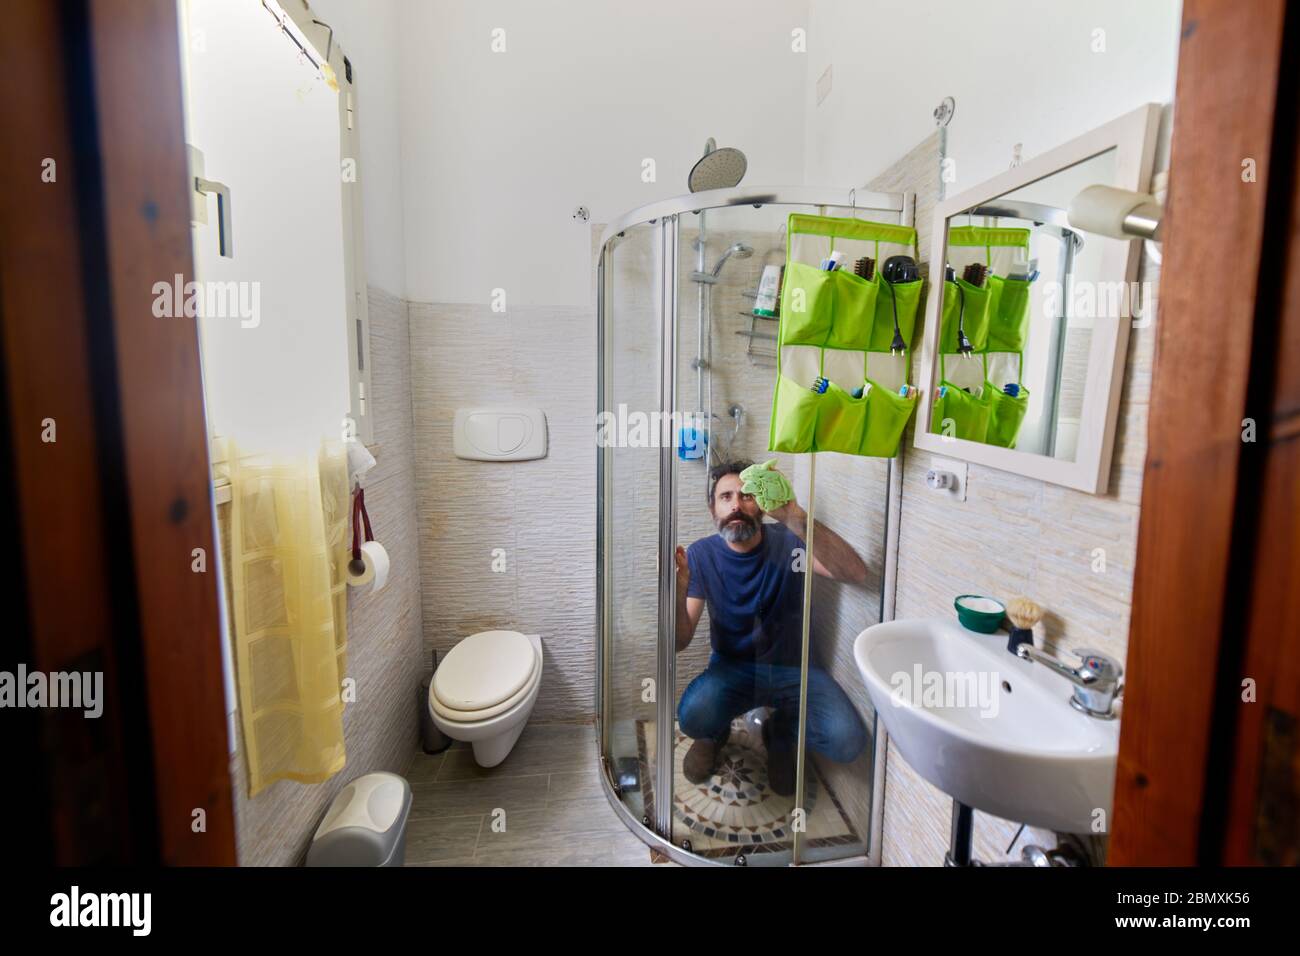 man cleaning the bathtub glass during coronavirus quarantine Stock Photo